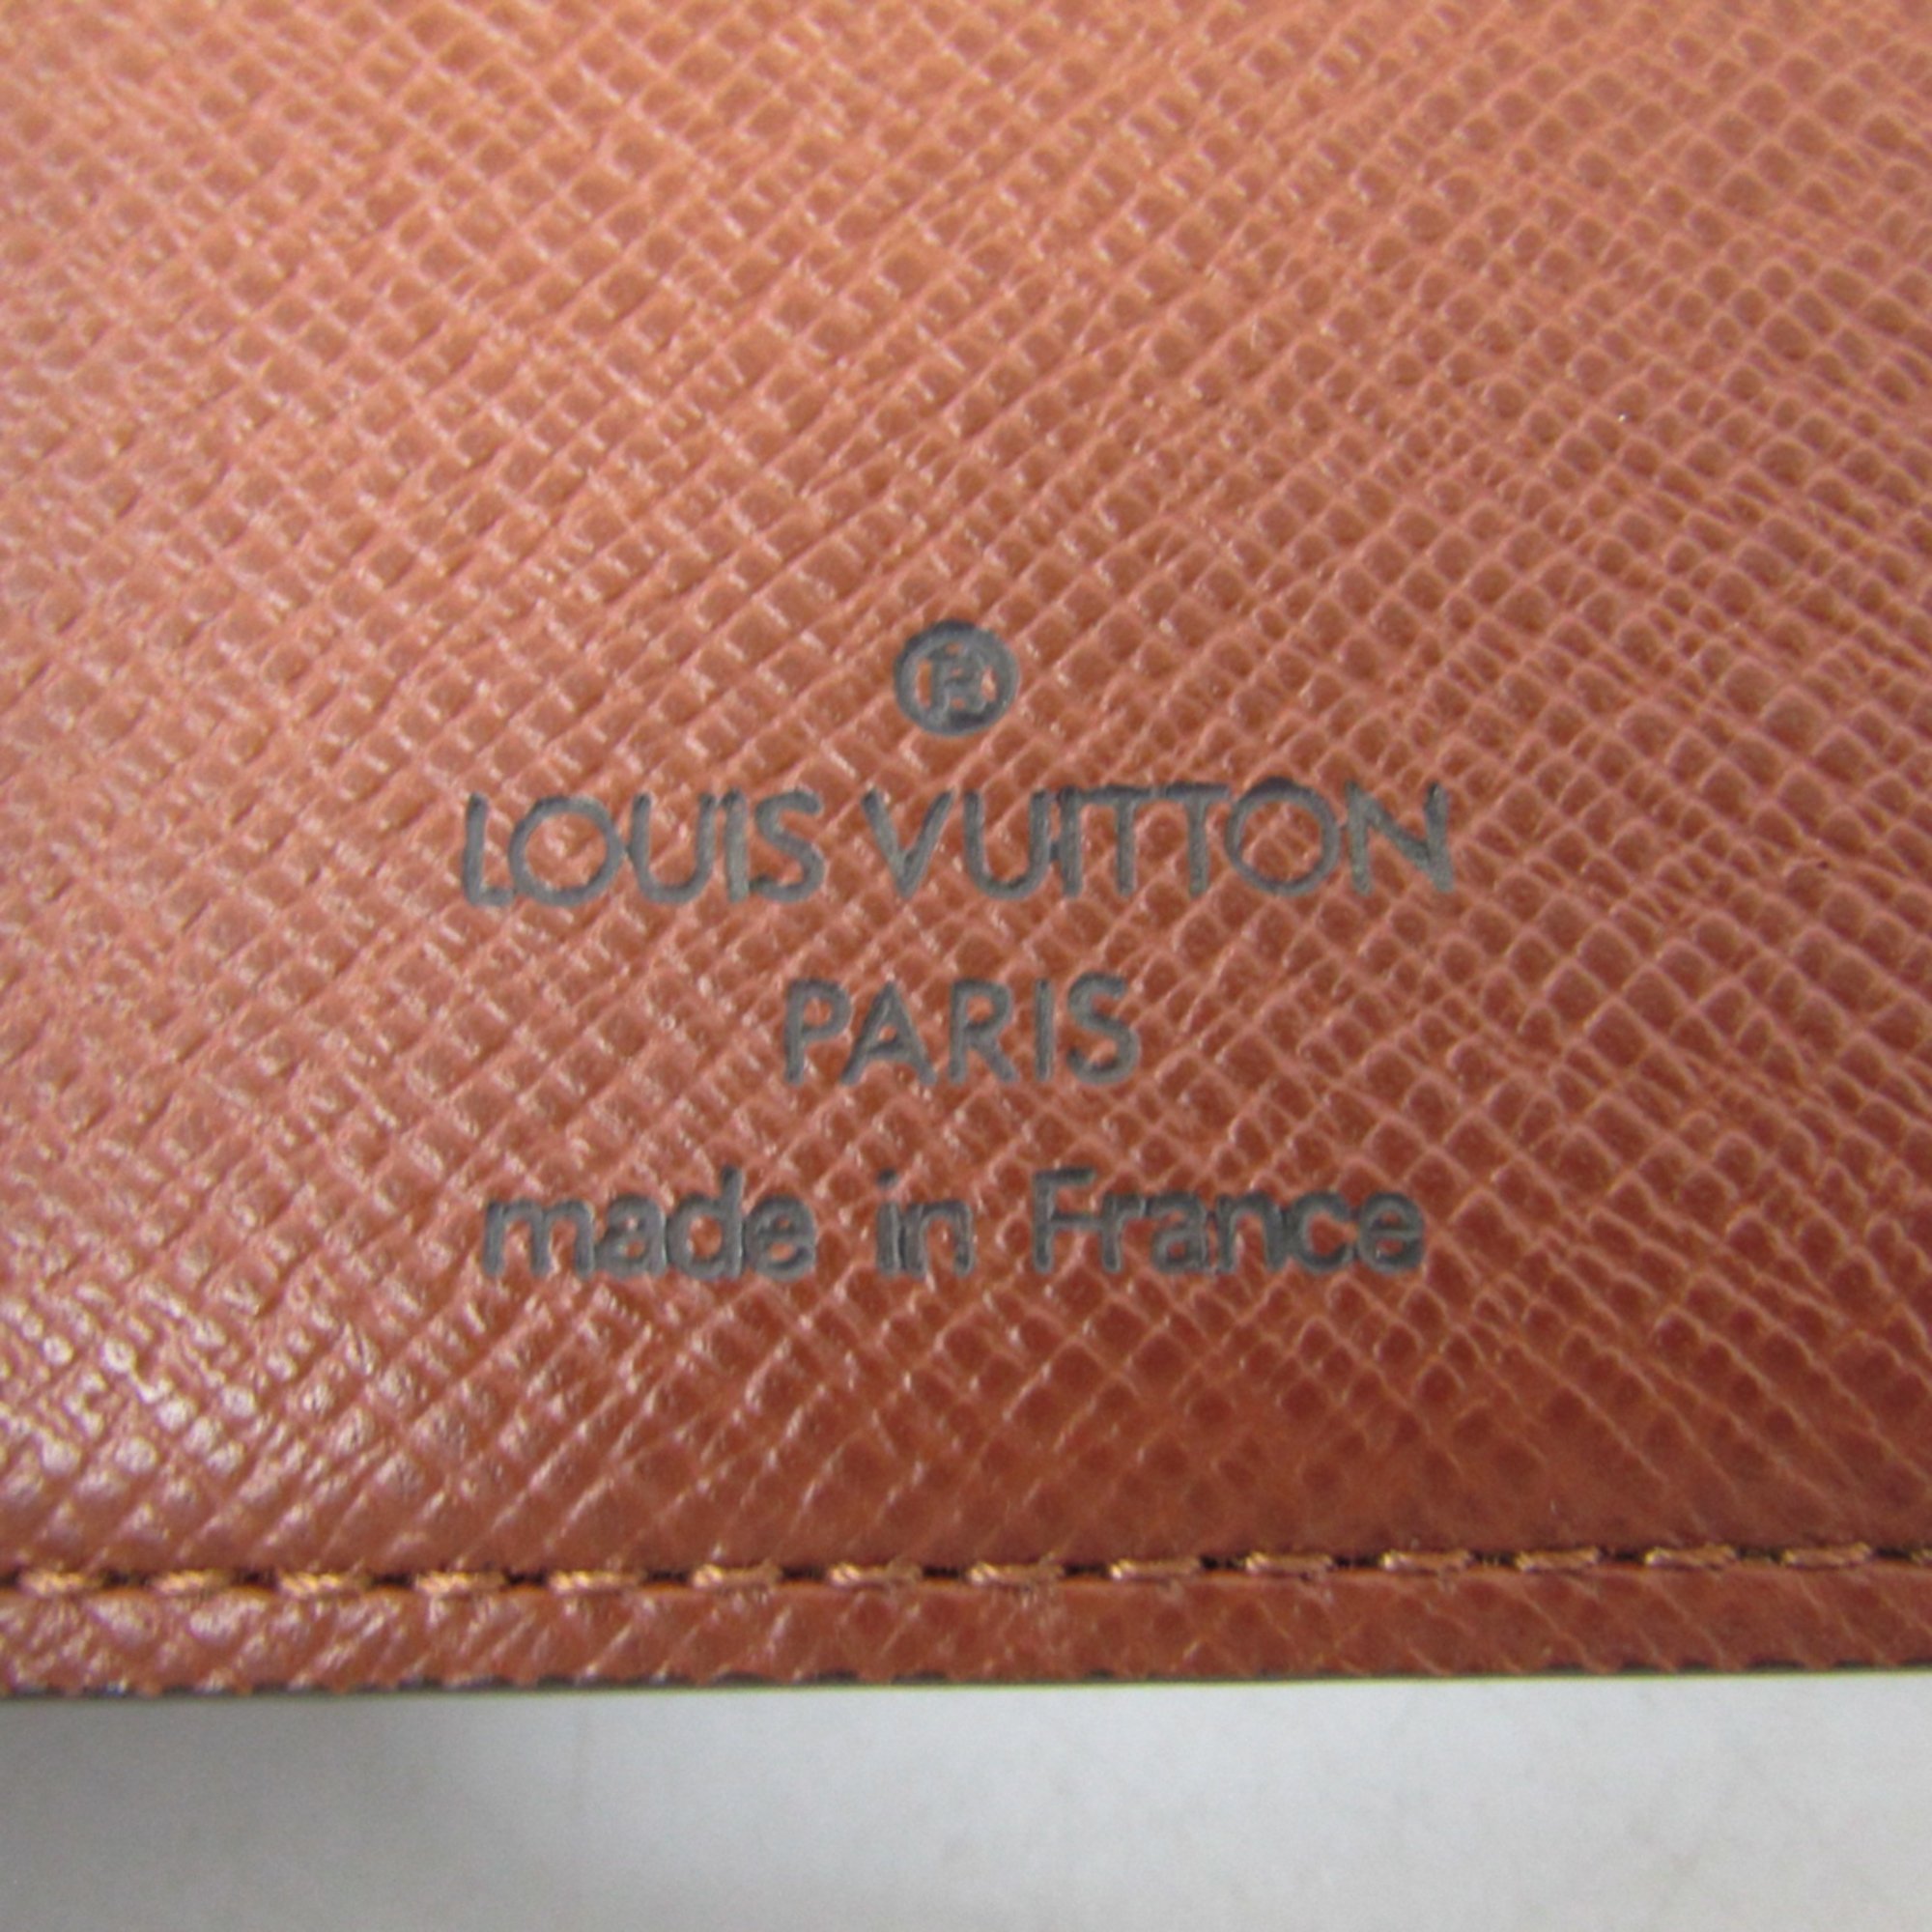 Louis Vuitton Monogram Portfoil 3 Vue M61343 Women's Monogram Wallet (bi-fold) Monogram